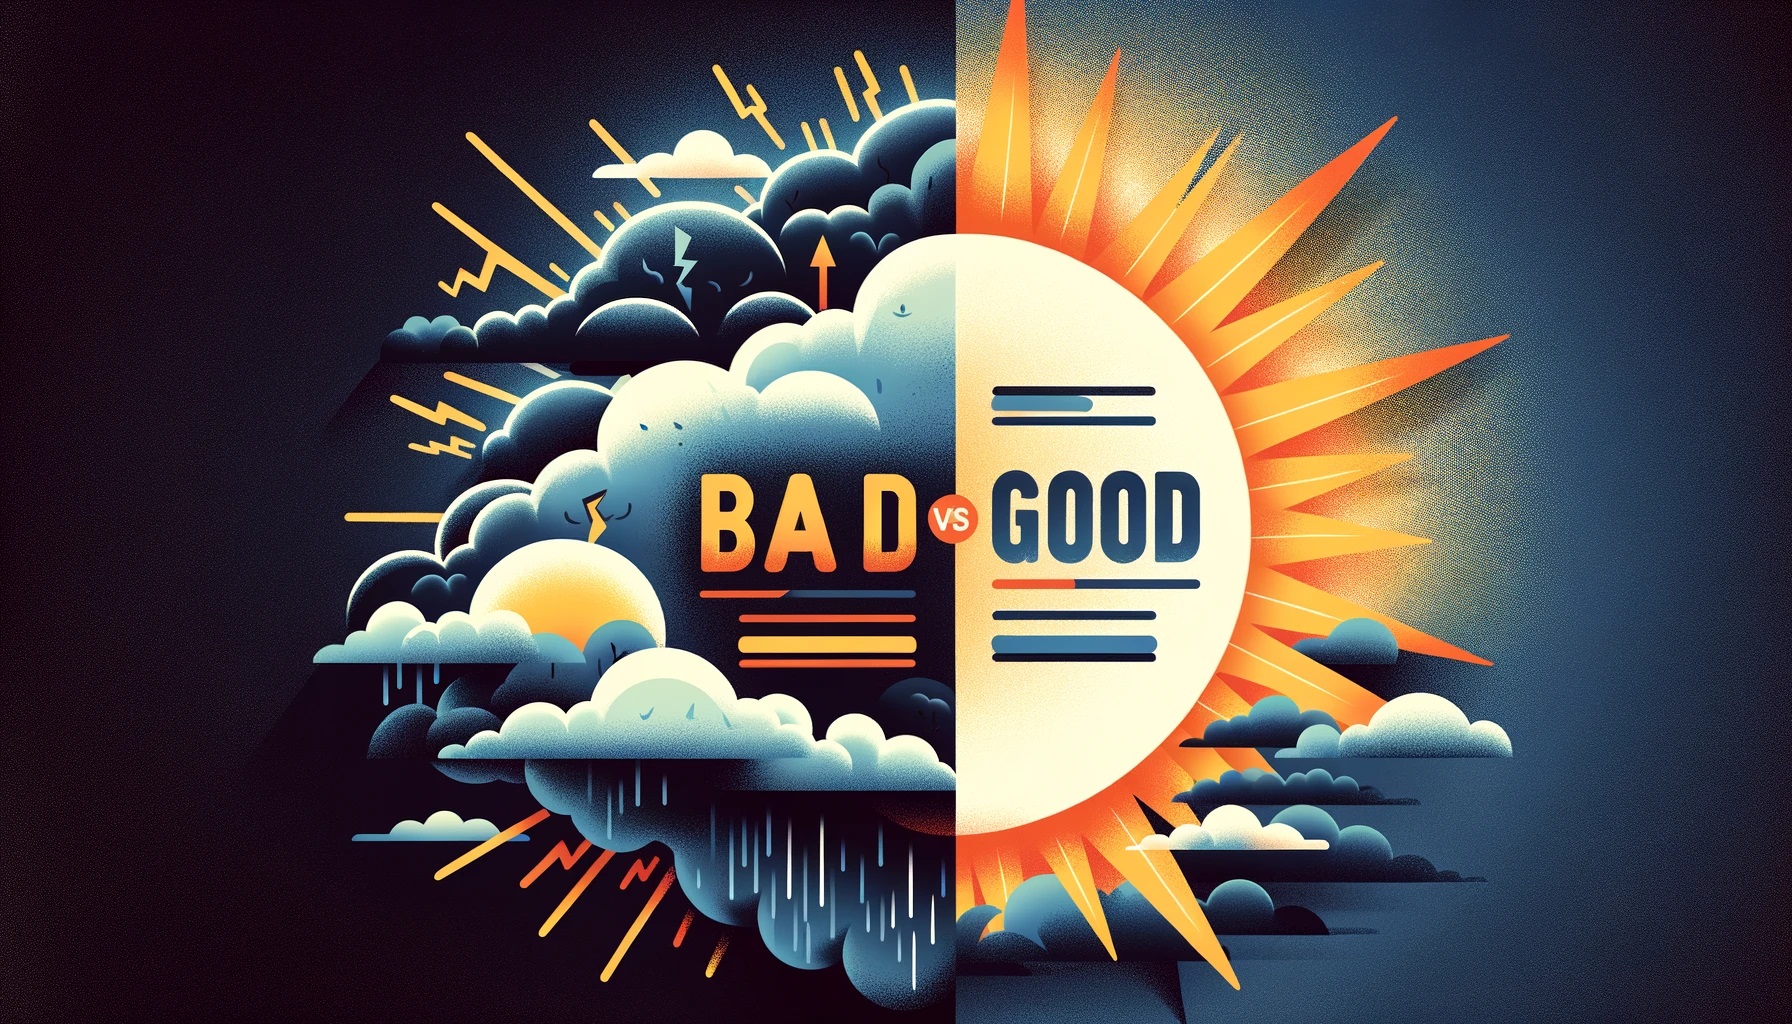 Bad Vs Good Credit